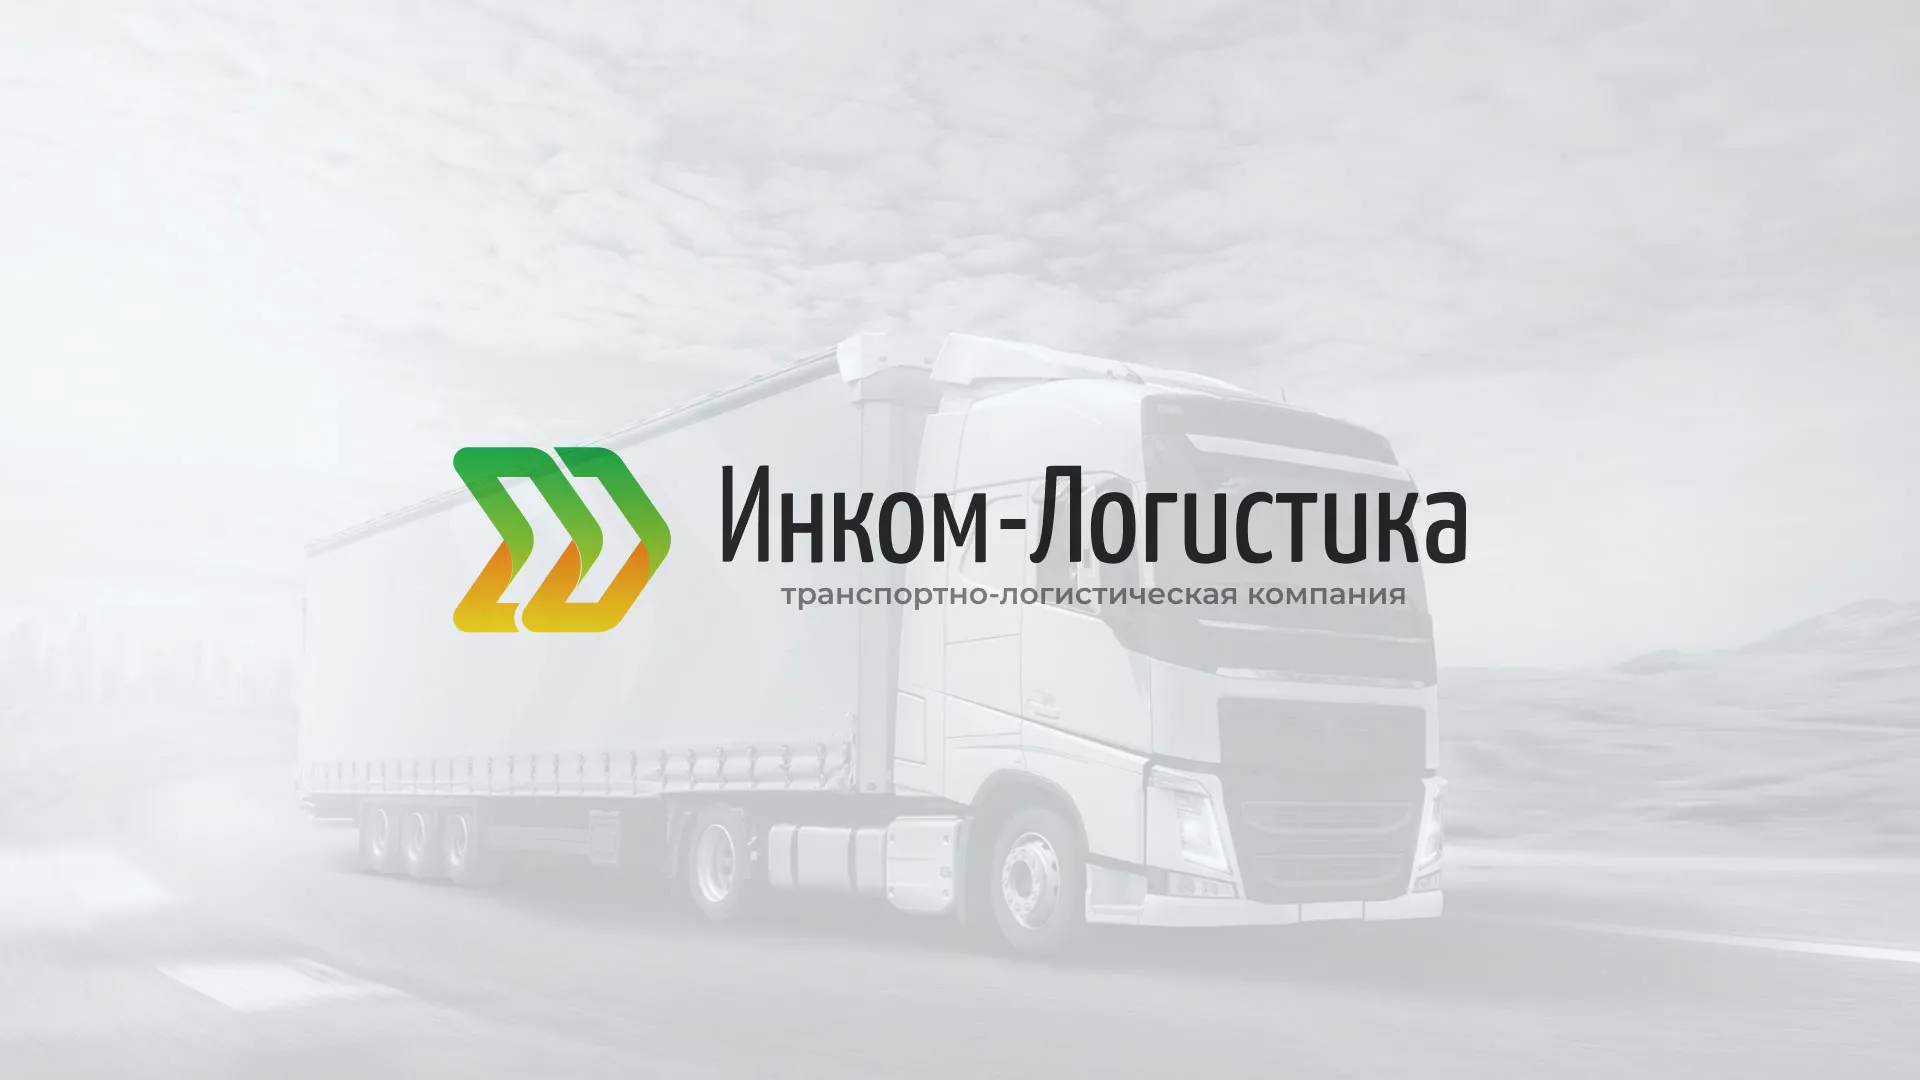 Разработка логотипа и сайта компании «Инком-Логистика» в Светлогорске